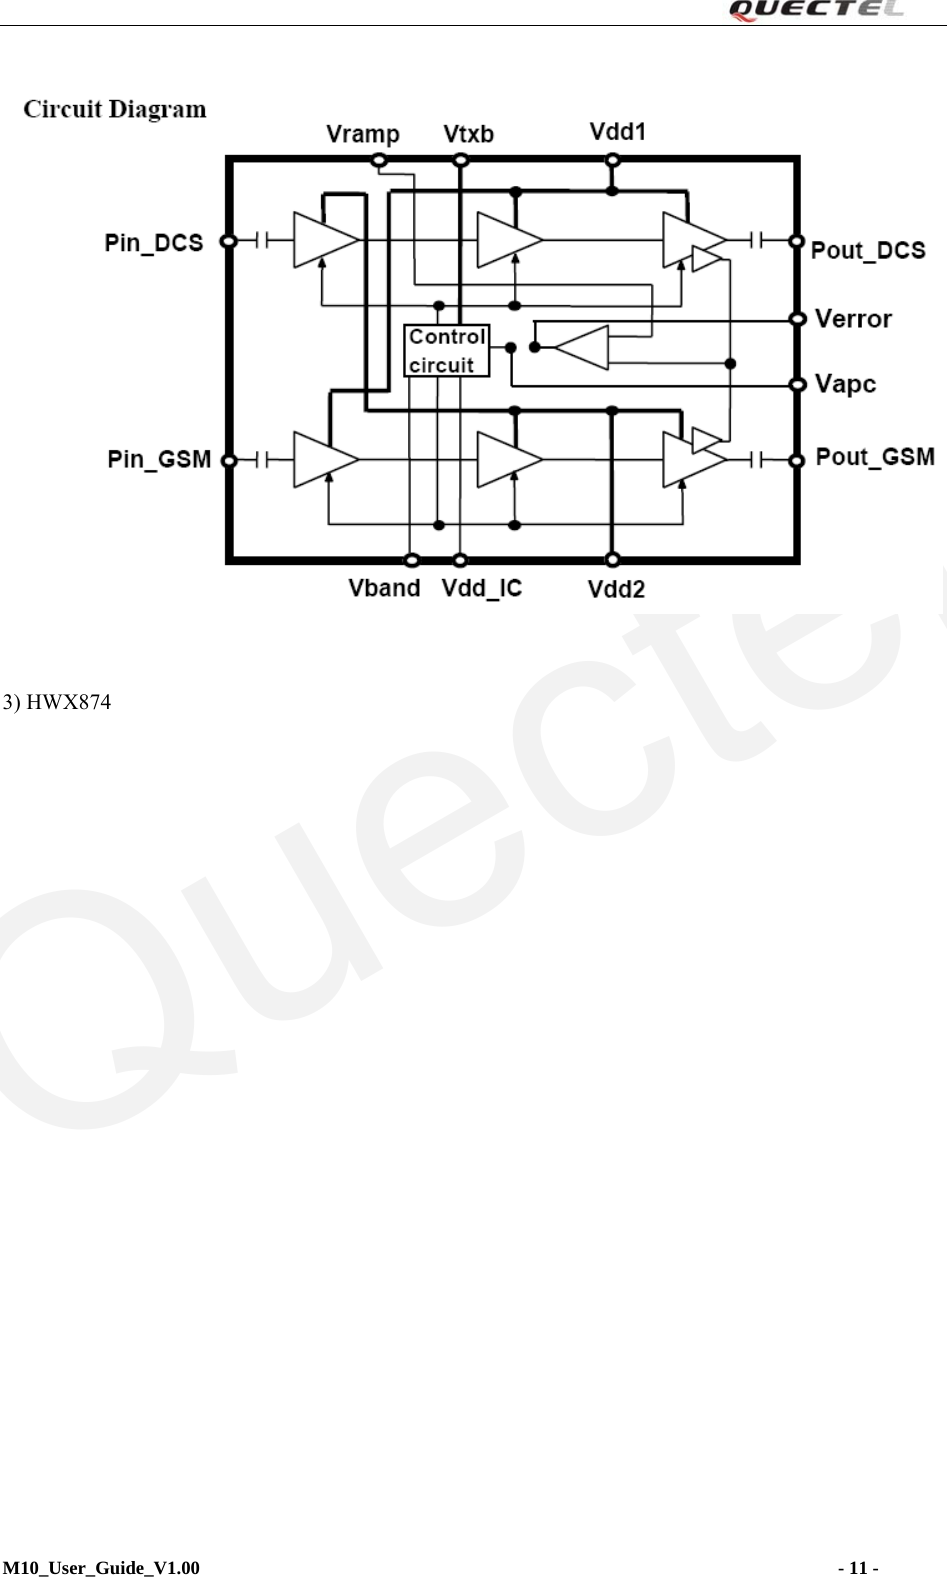 Quectel                                                                  3) HWX874  M10_User_Guide_V1.00                                                                    - 11 -   